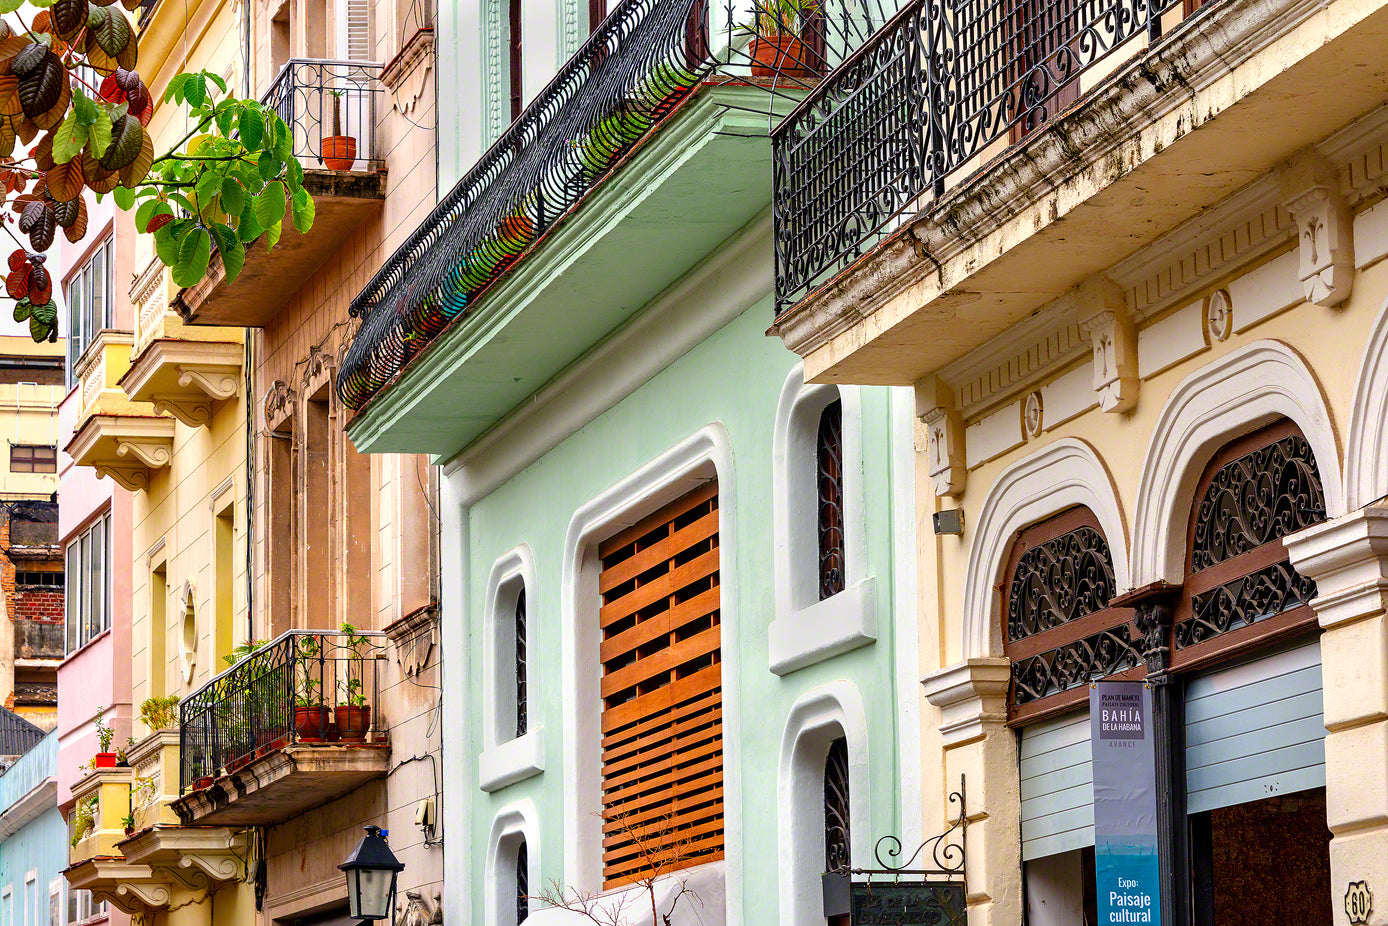 A photo of colorful buildings in Havana, Cuba